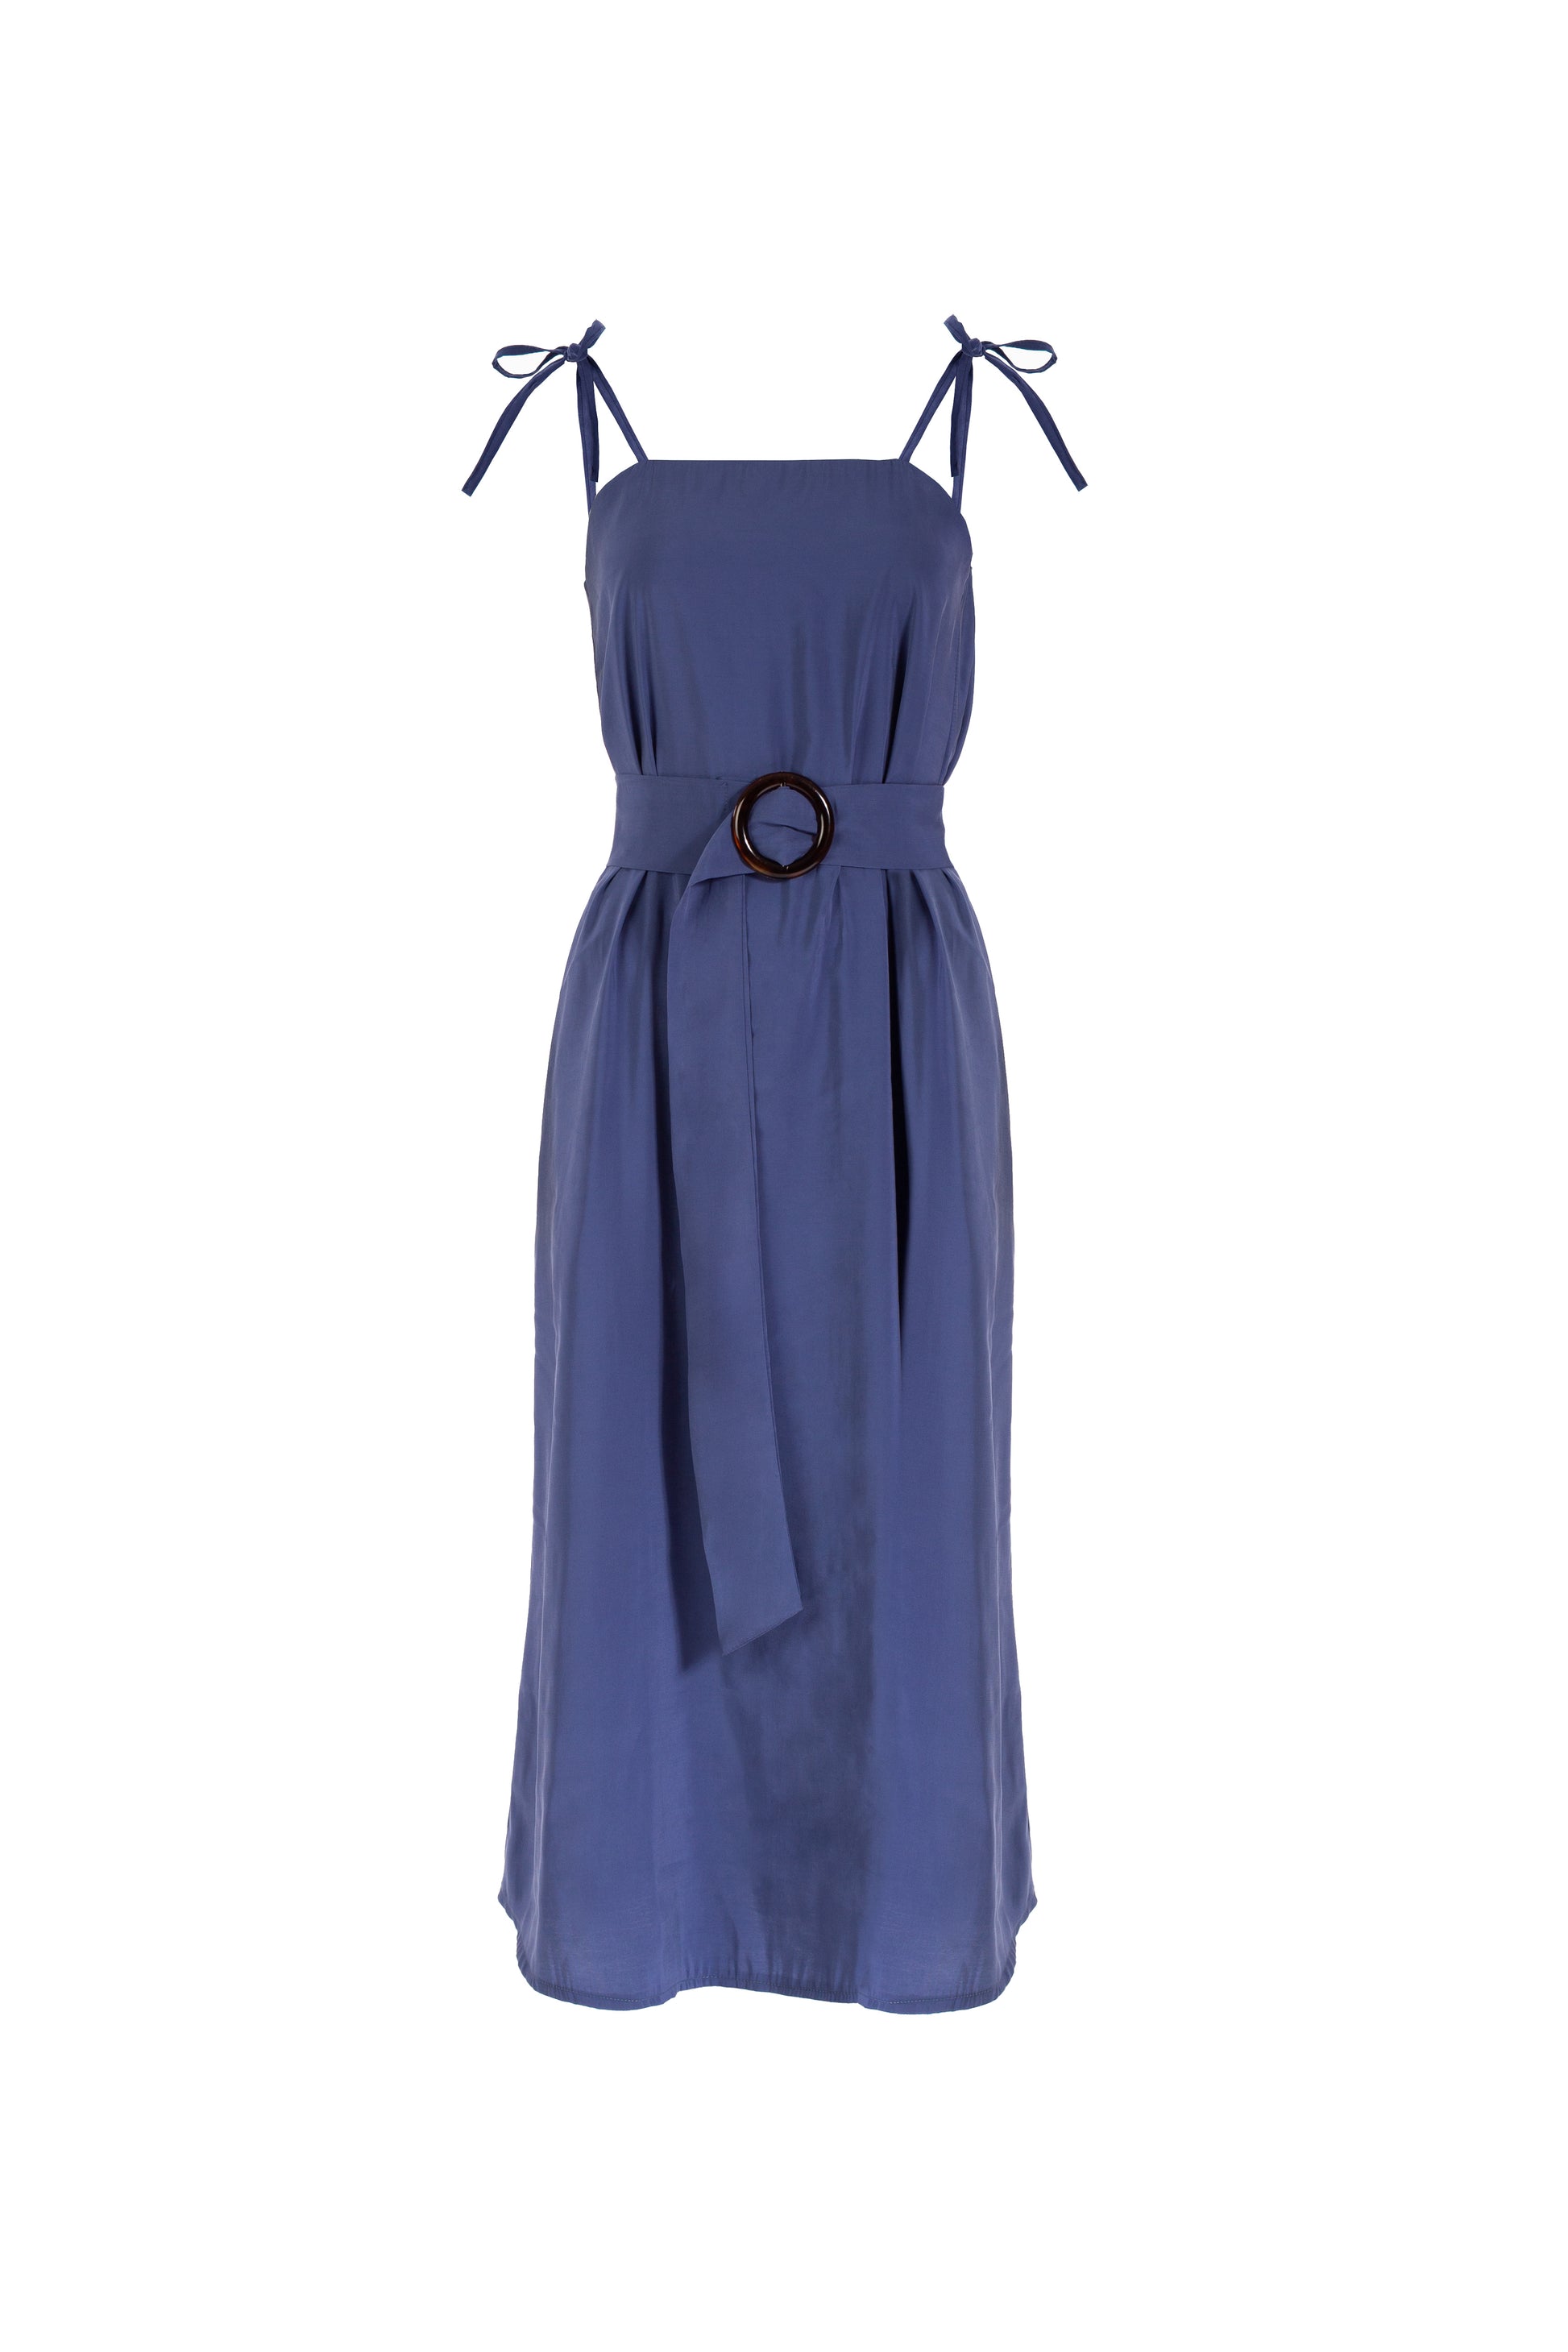 9752 - KAREN - BLUE DRESS -BYOU by Patricia Gouveia